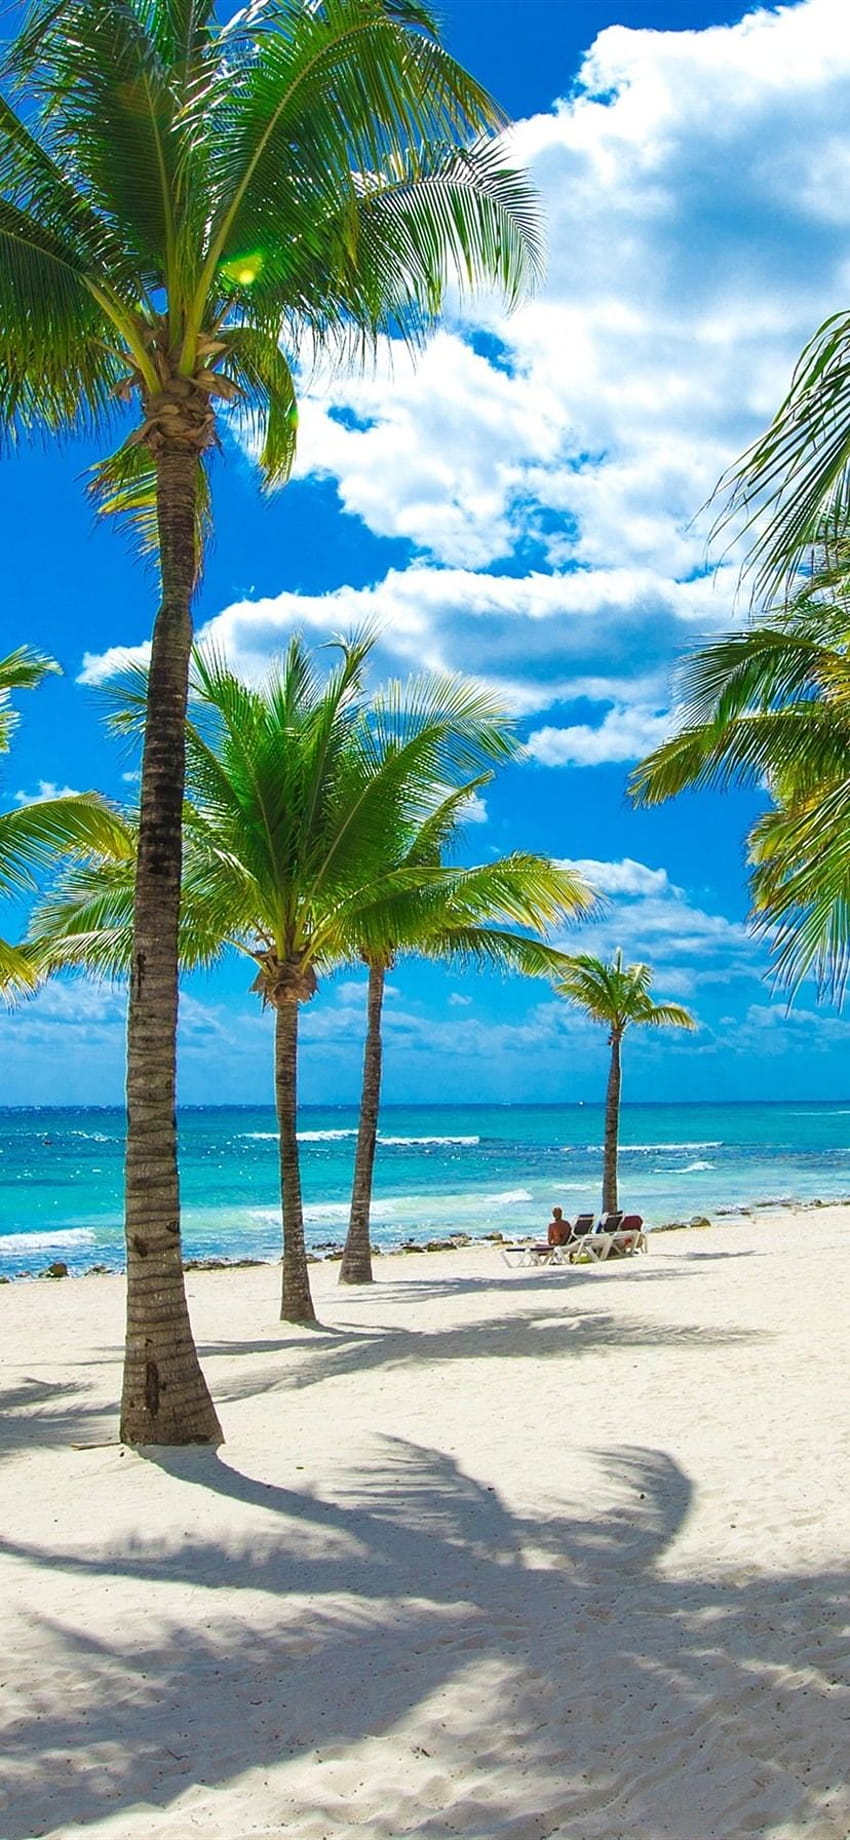 Playa, mar, palmeras, tropical, nubes, sol 1080x1920, phone palm beach fondo de pantalla del teléfono